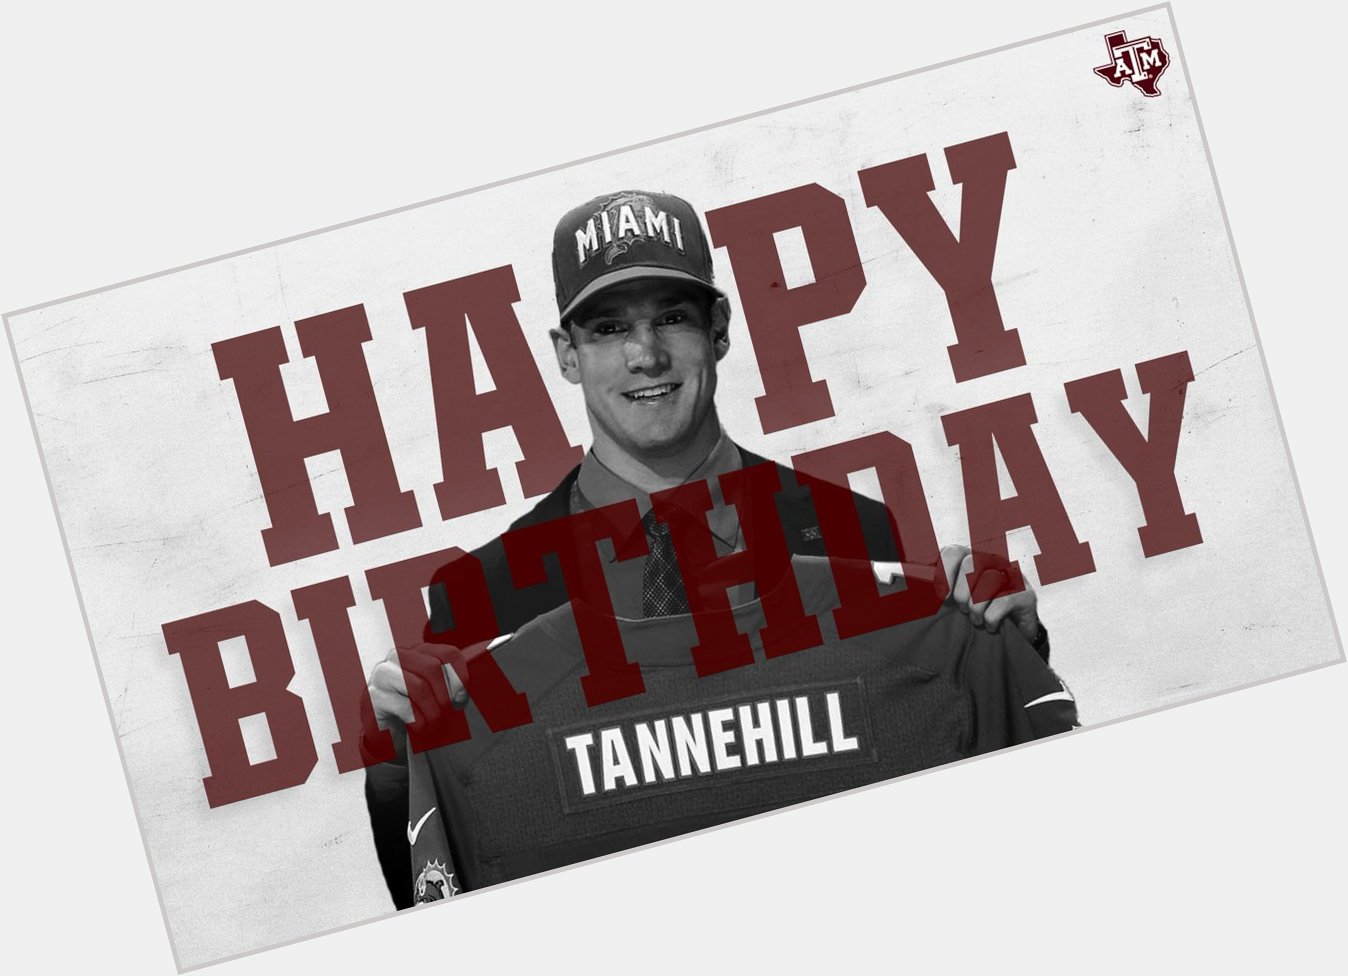  join us in wishing Ryan Tannehill a Happy Birthday! 

Happy Birthday,   